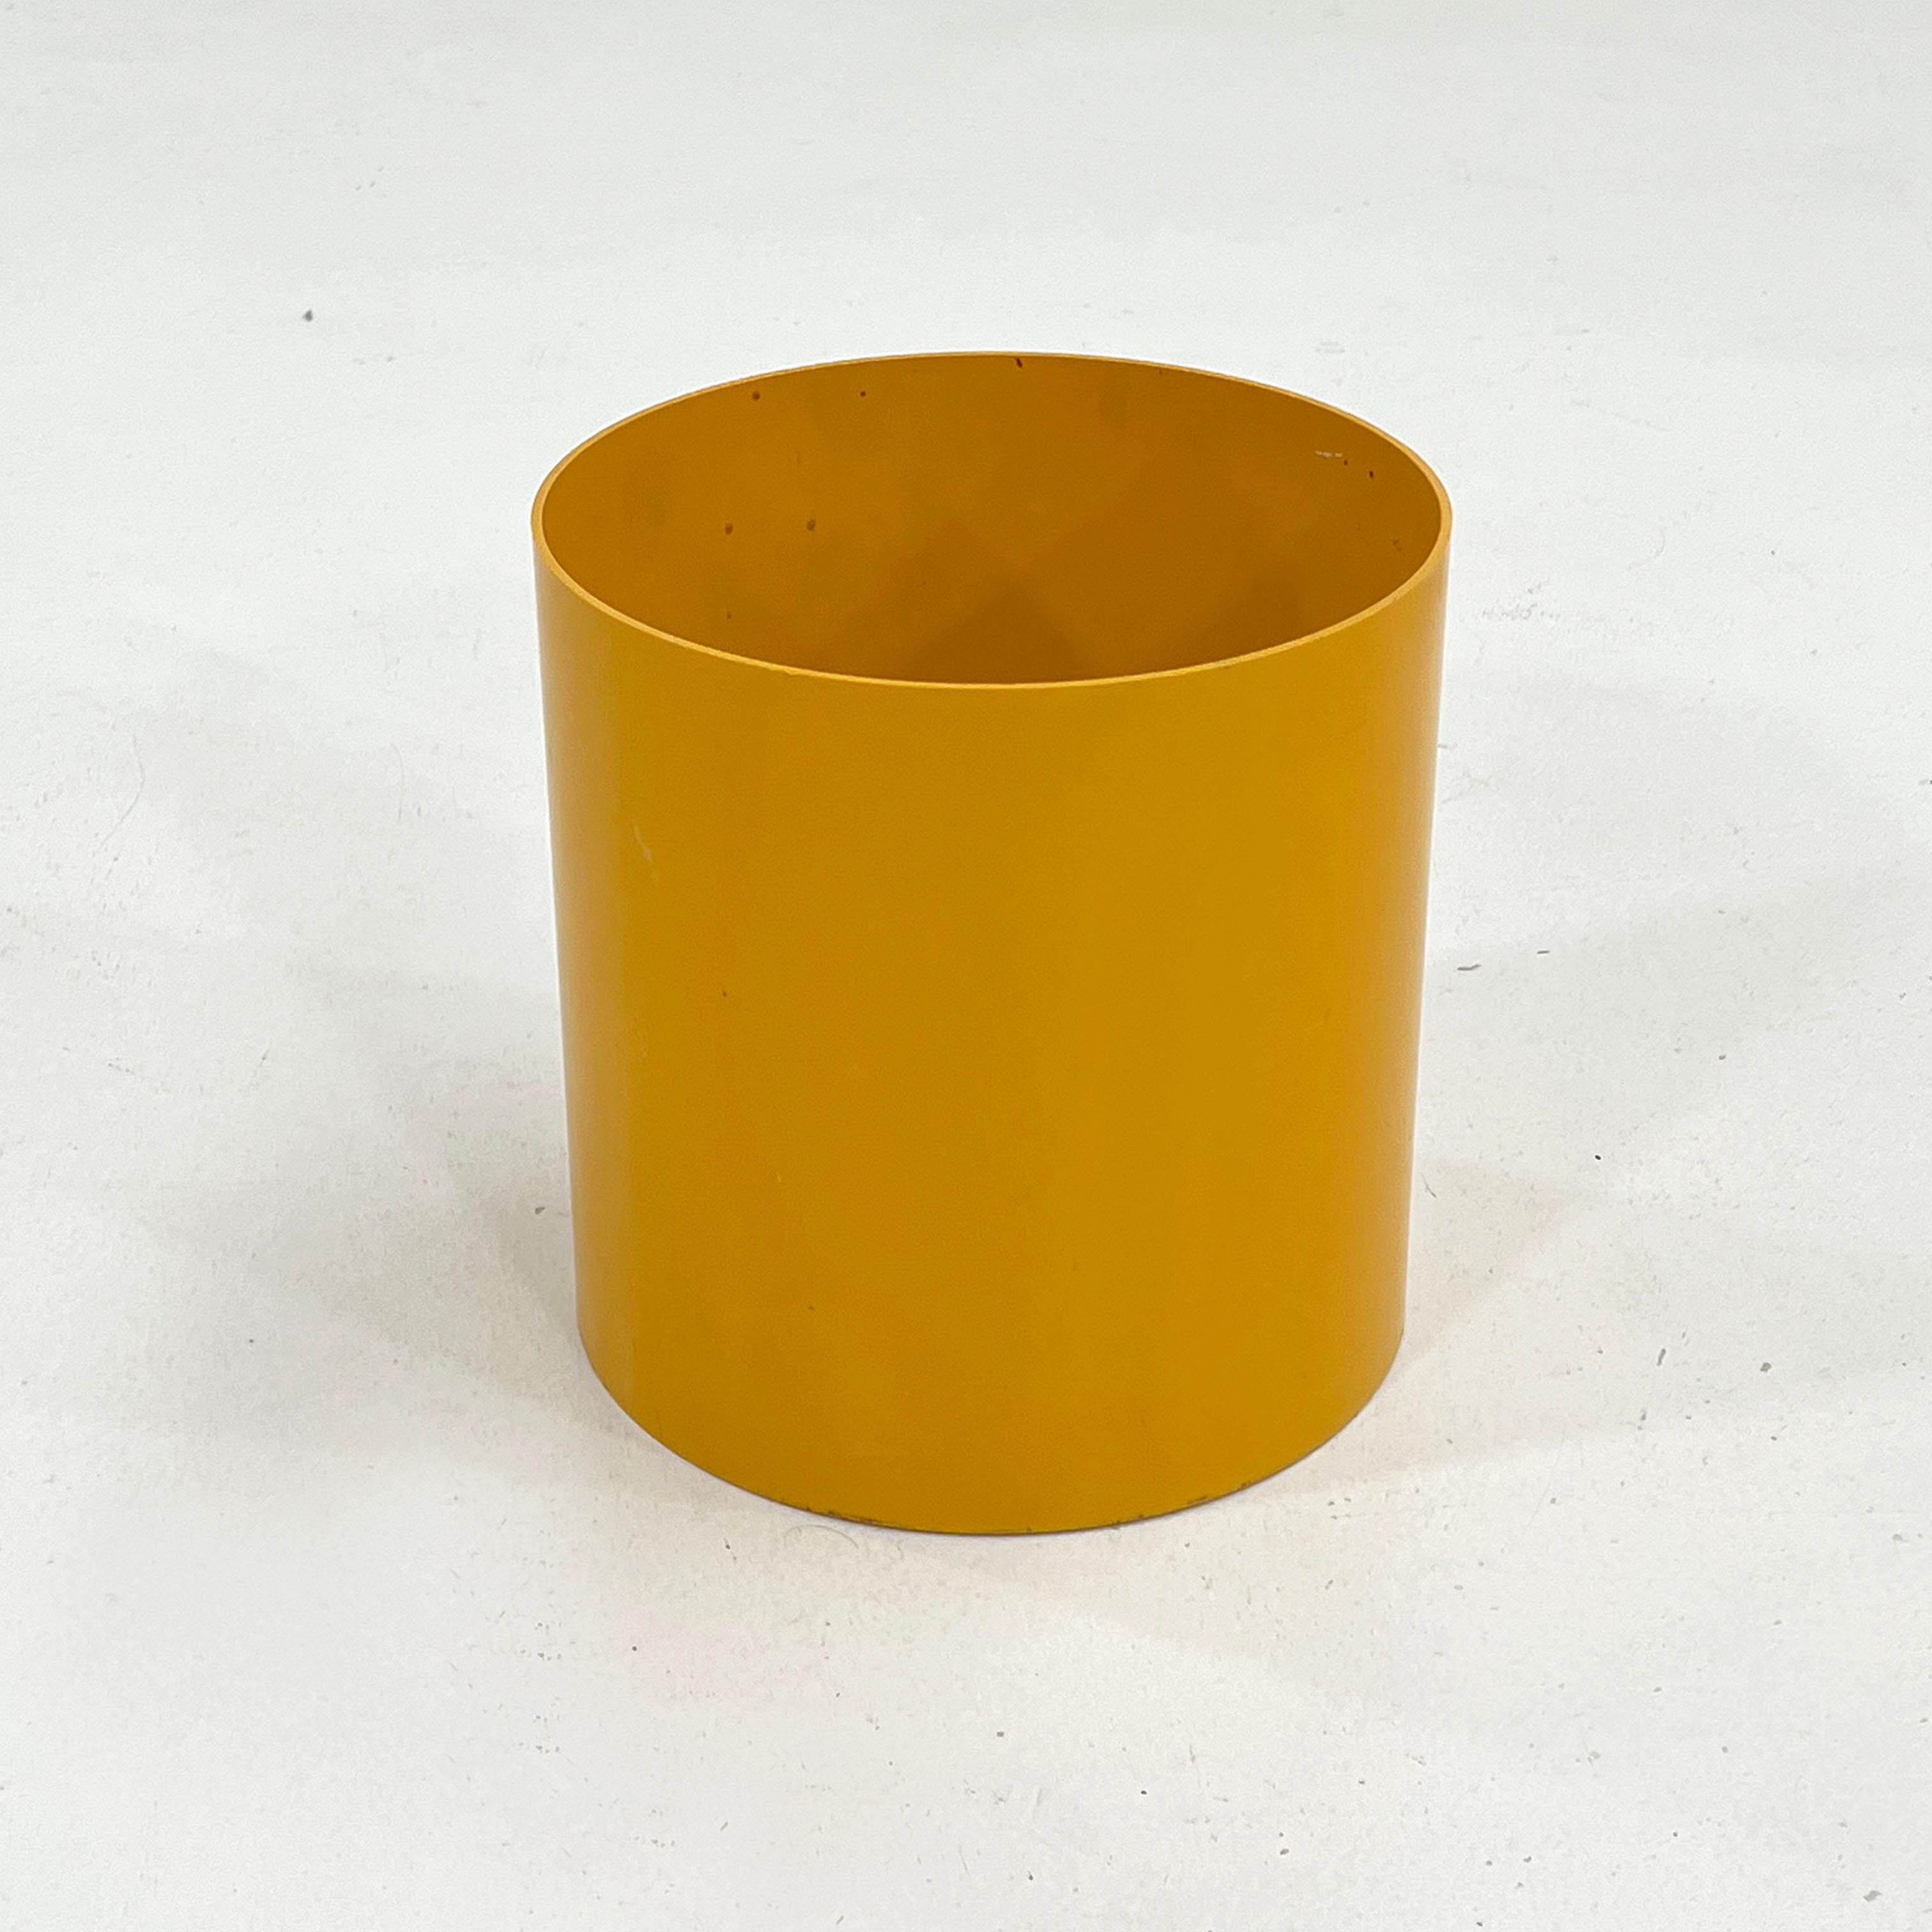 Designer - Gino Colombini
Producer - Kartell 
Model - Model 4660 
Design Period - Seventies
Measurements - width 25 cm x depth 25 cm x height 25 cm
Materials - Plastic
Color - Yellow.